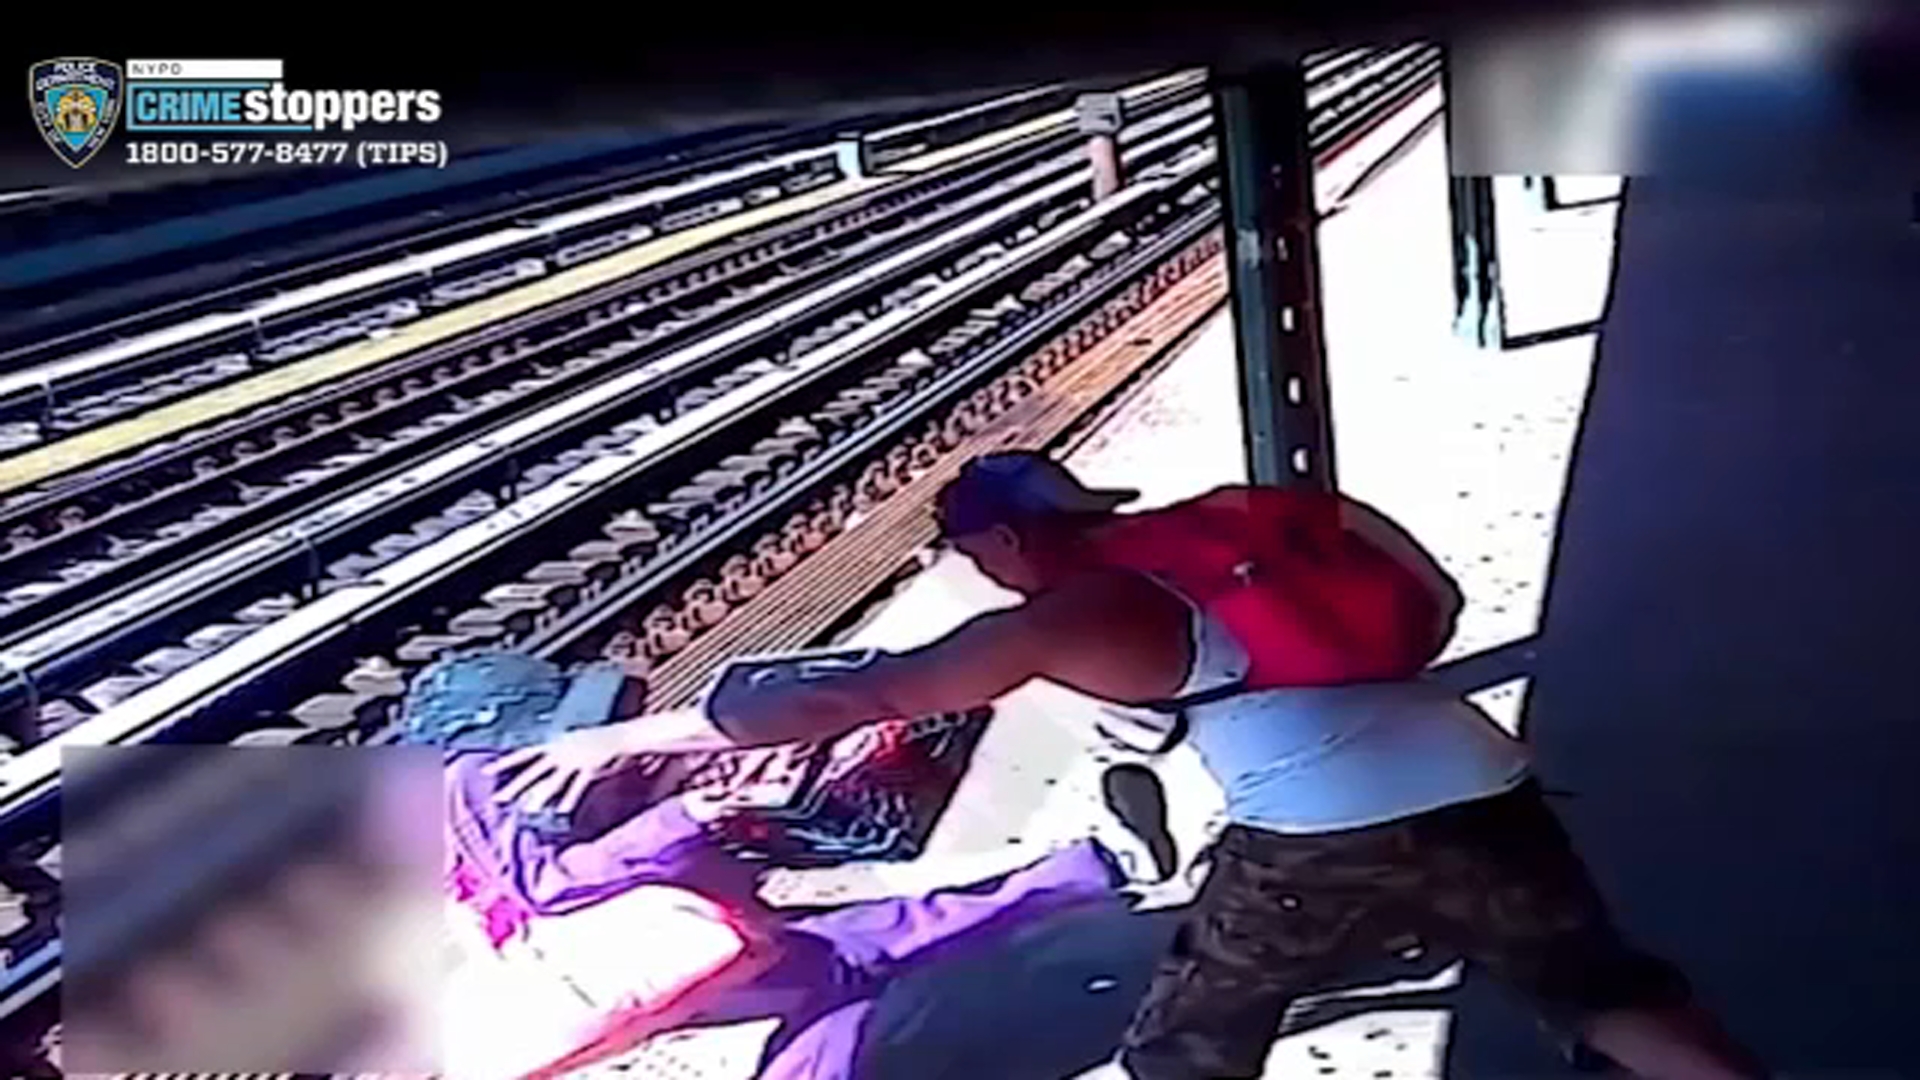 Man wanted for shoving woman onto tracks at Bronx subway station